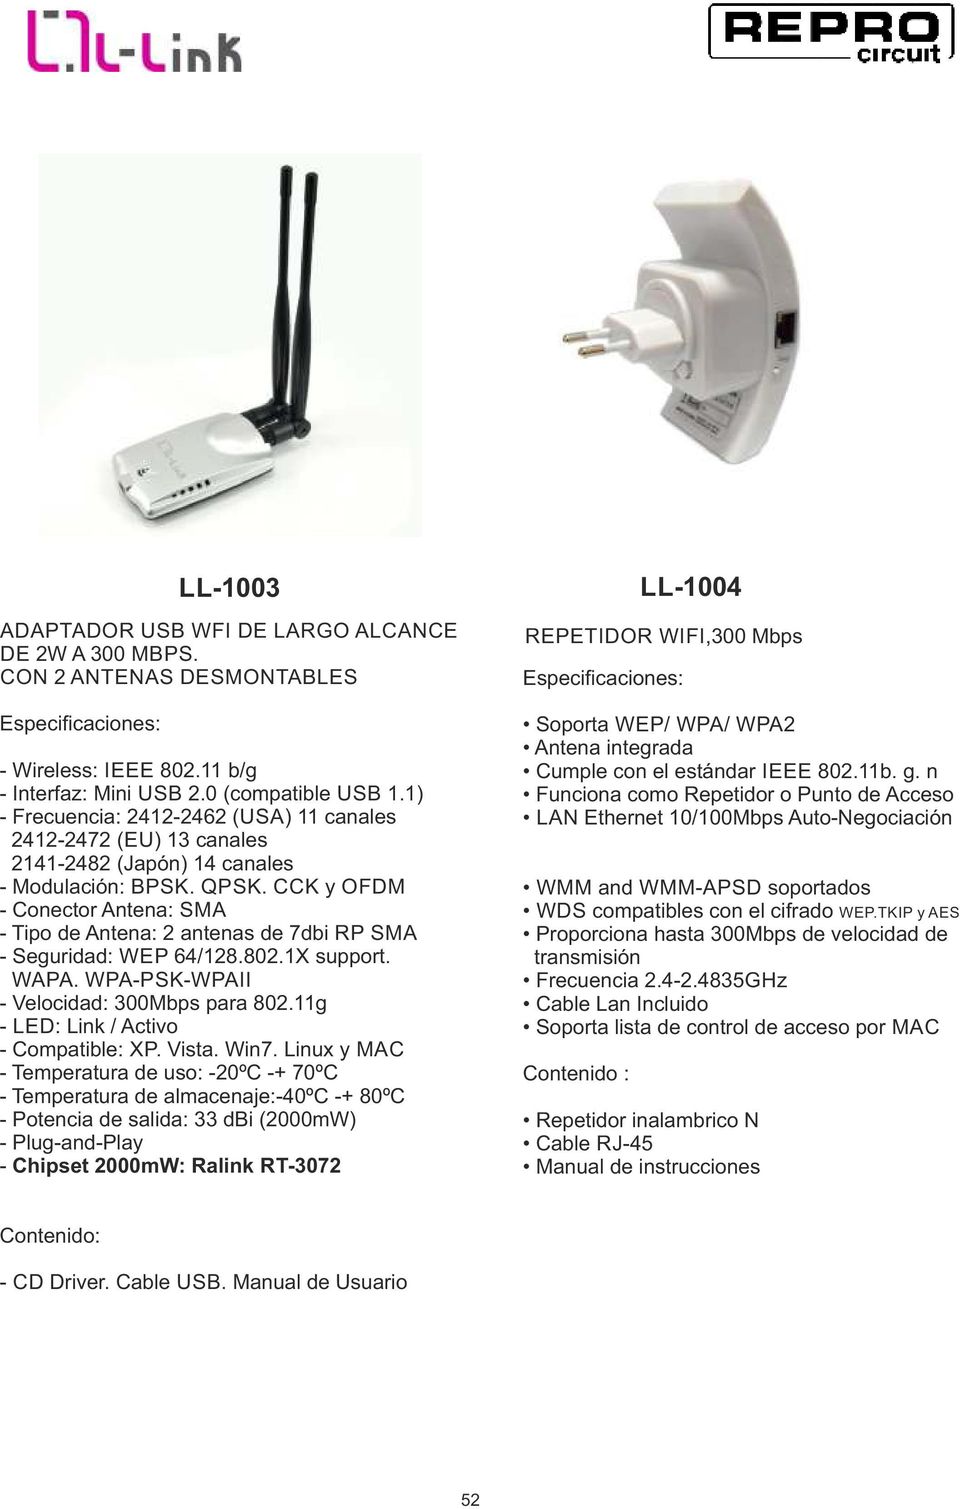 CCK y OFDM - Conector Antena: SMA - Tipo de Antena: 2 antenas de 7dbi RP SMA - Seguridad: WEP 64/128.802.1X support. WAPA. WPA-PSK-WPAII - Velocidad: 300Mbps para 802.